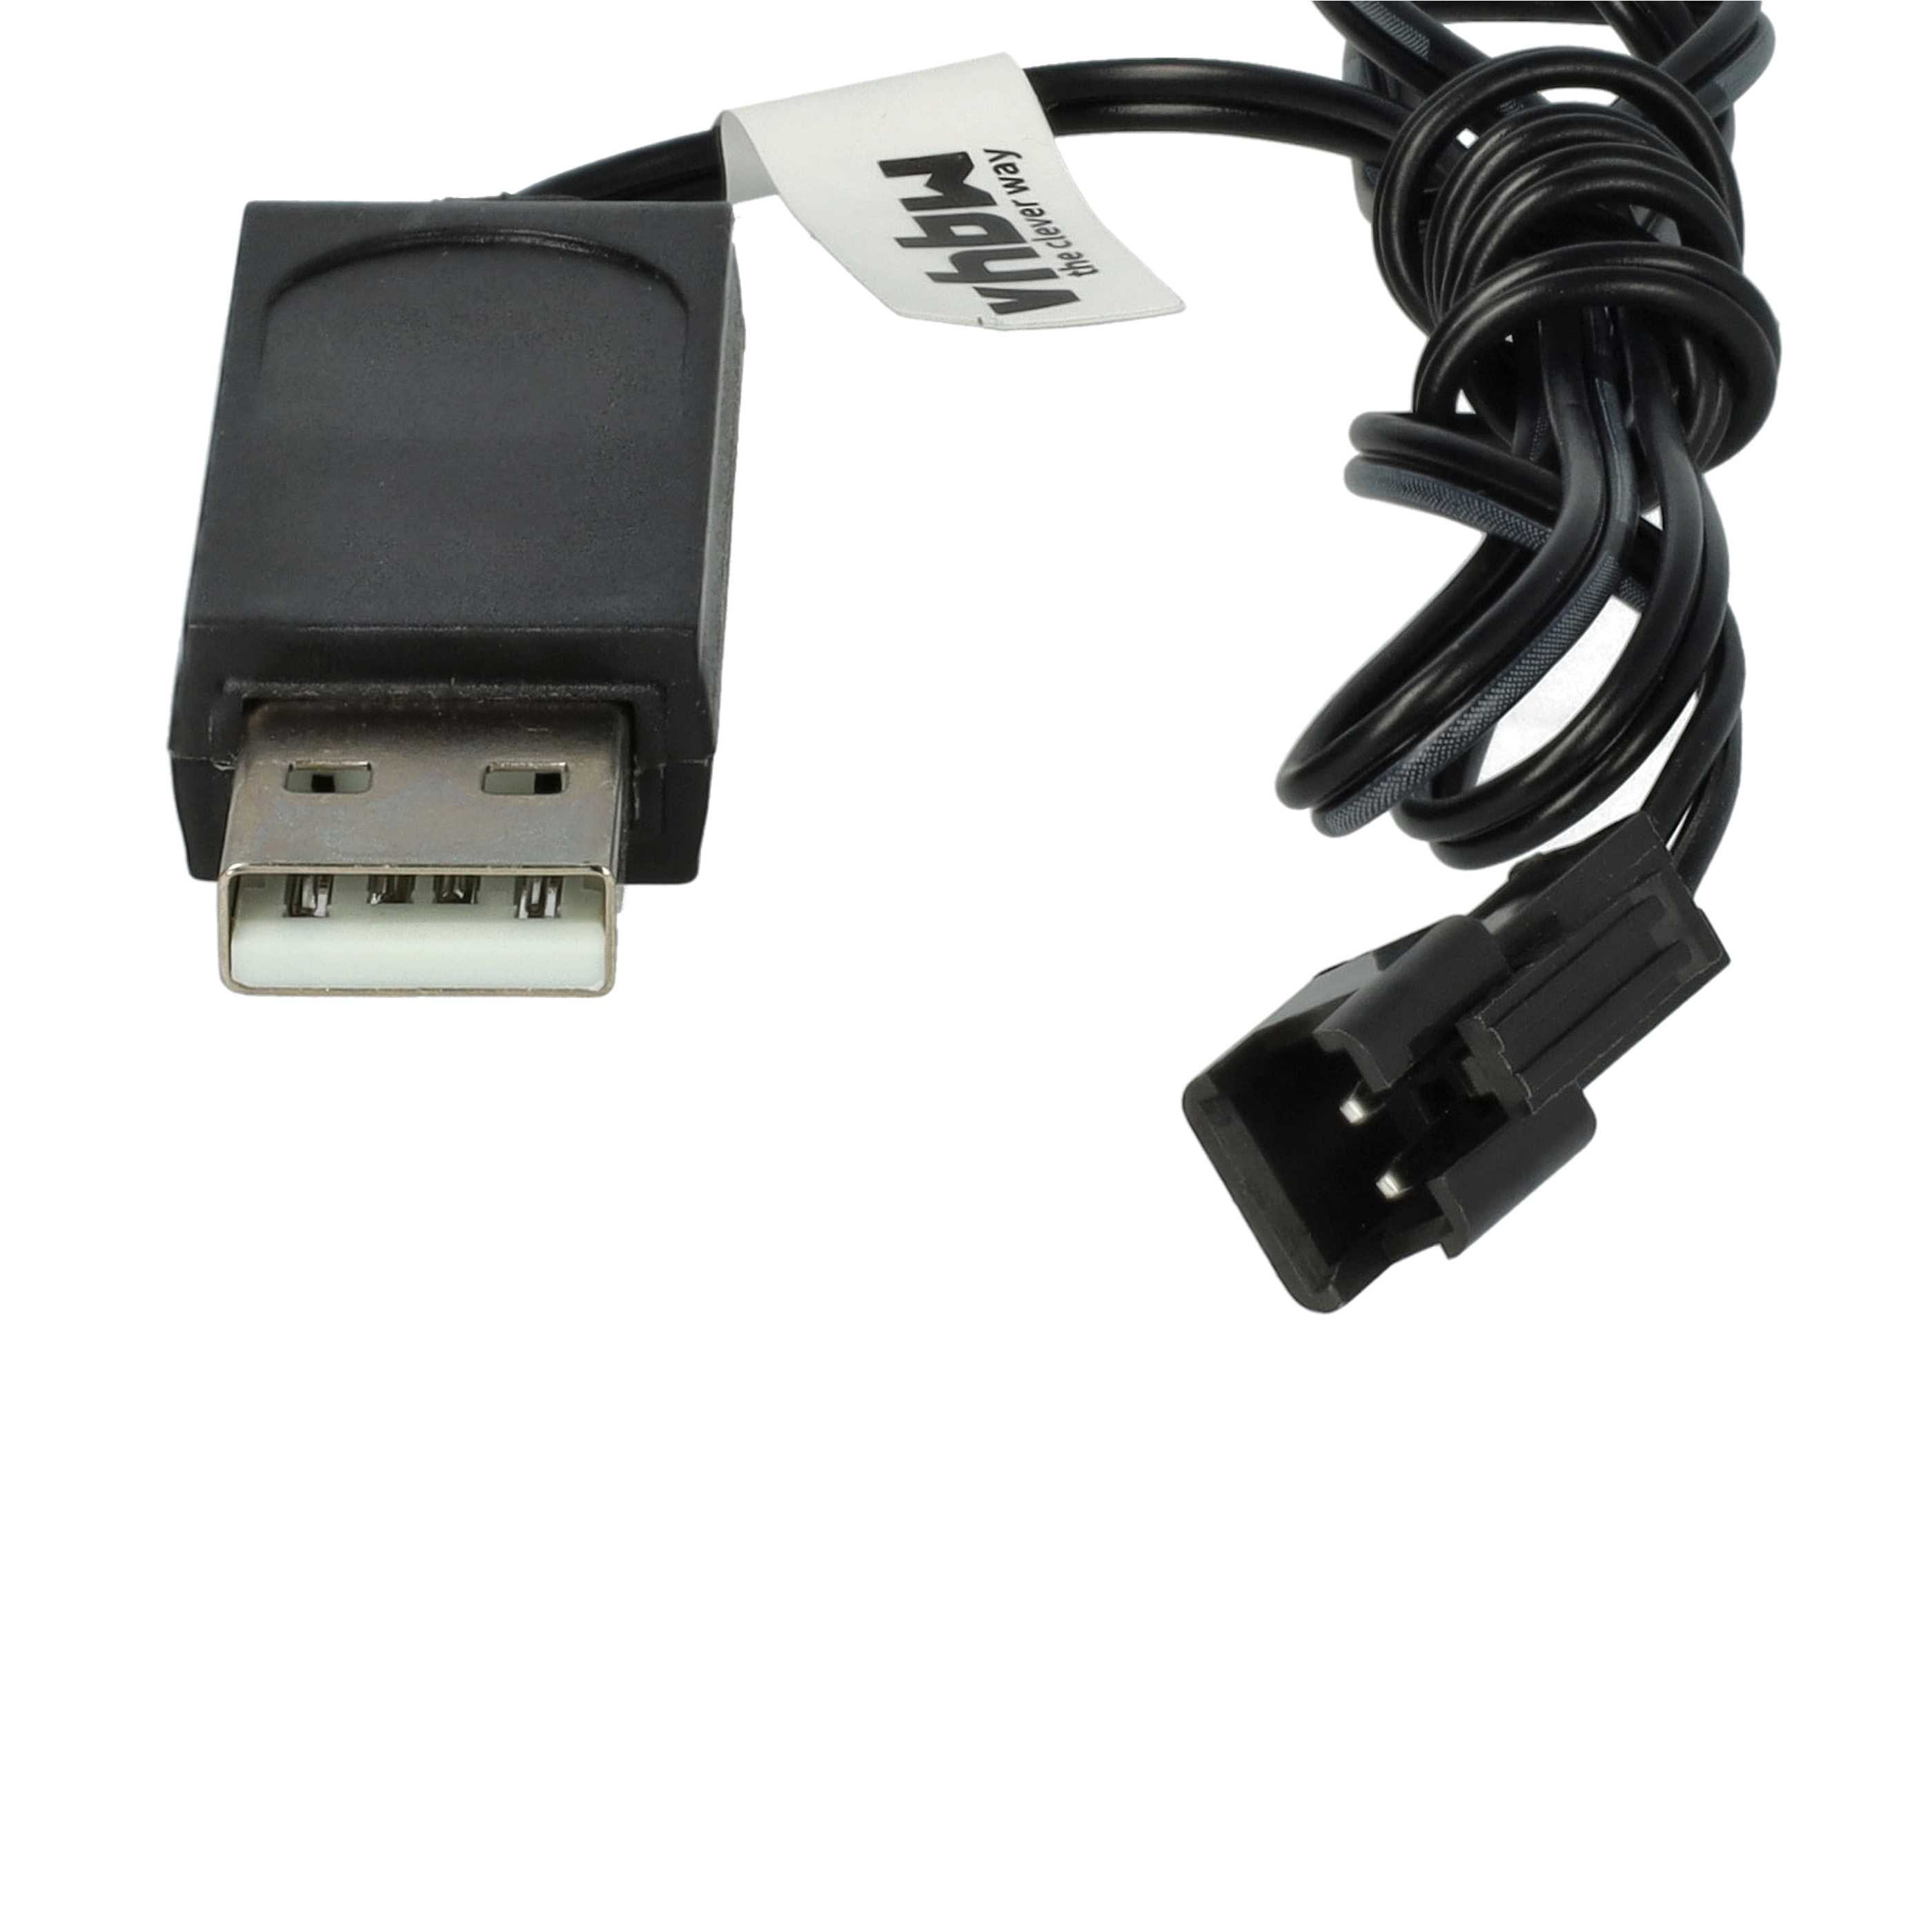 USB-Ladekabel passend für RC-Akkus mit SM-2P-Anschluss, RC-Modellbau Akkupacks - 60cm 6V